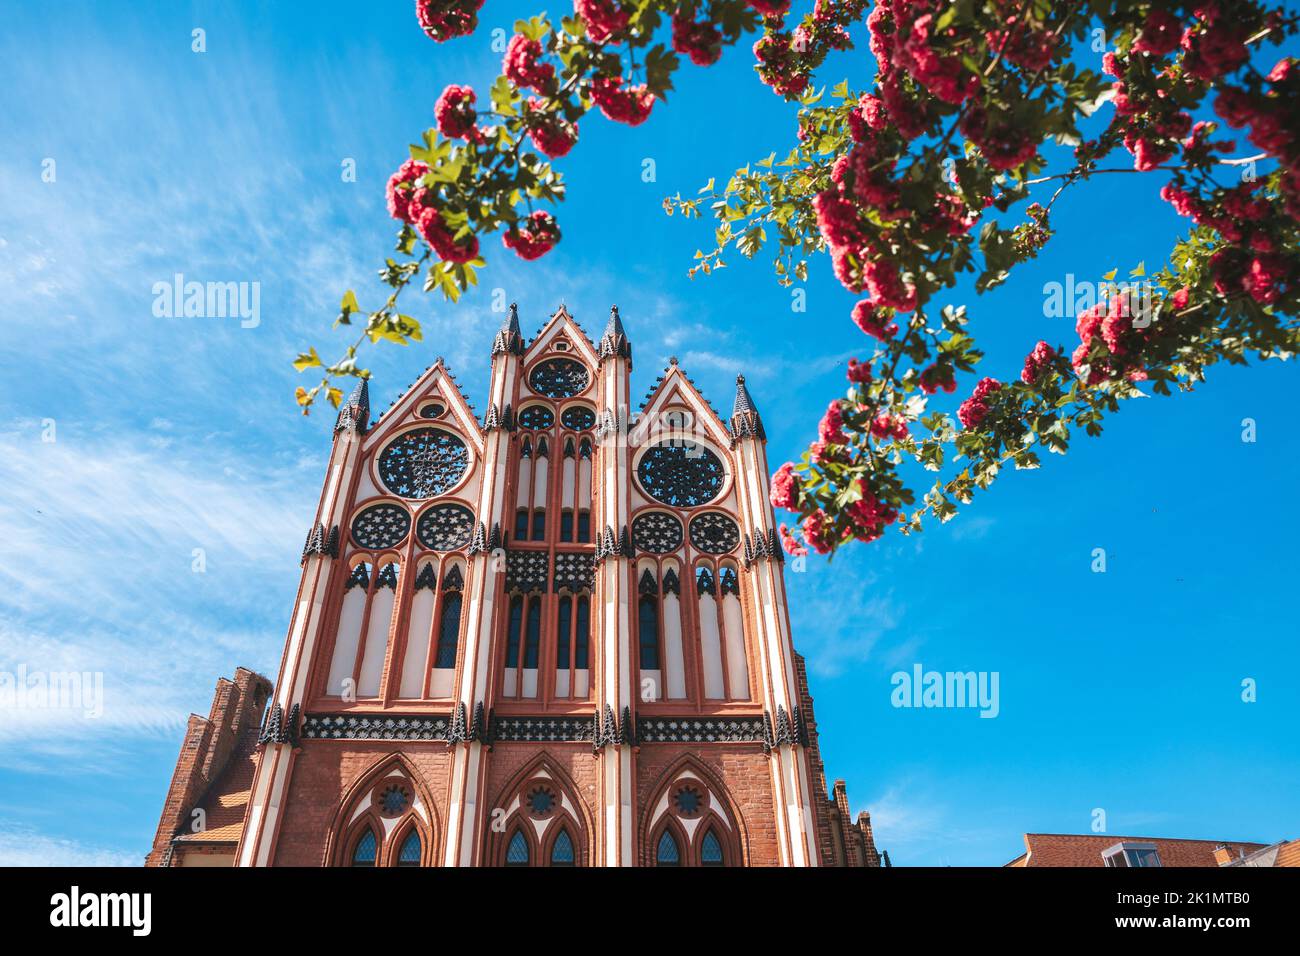 Tangermünde - Historic town hall in brick Gothic style, Tangermünde, Saxony-Anhalt, Germany Stock Photo